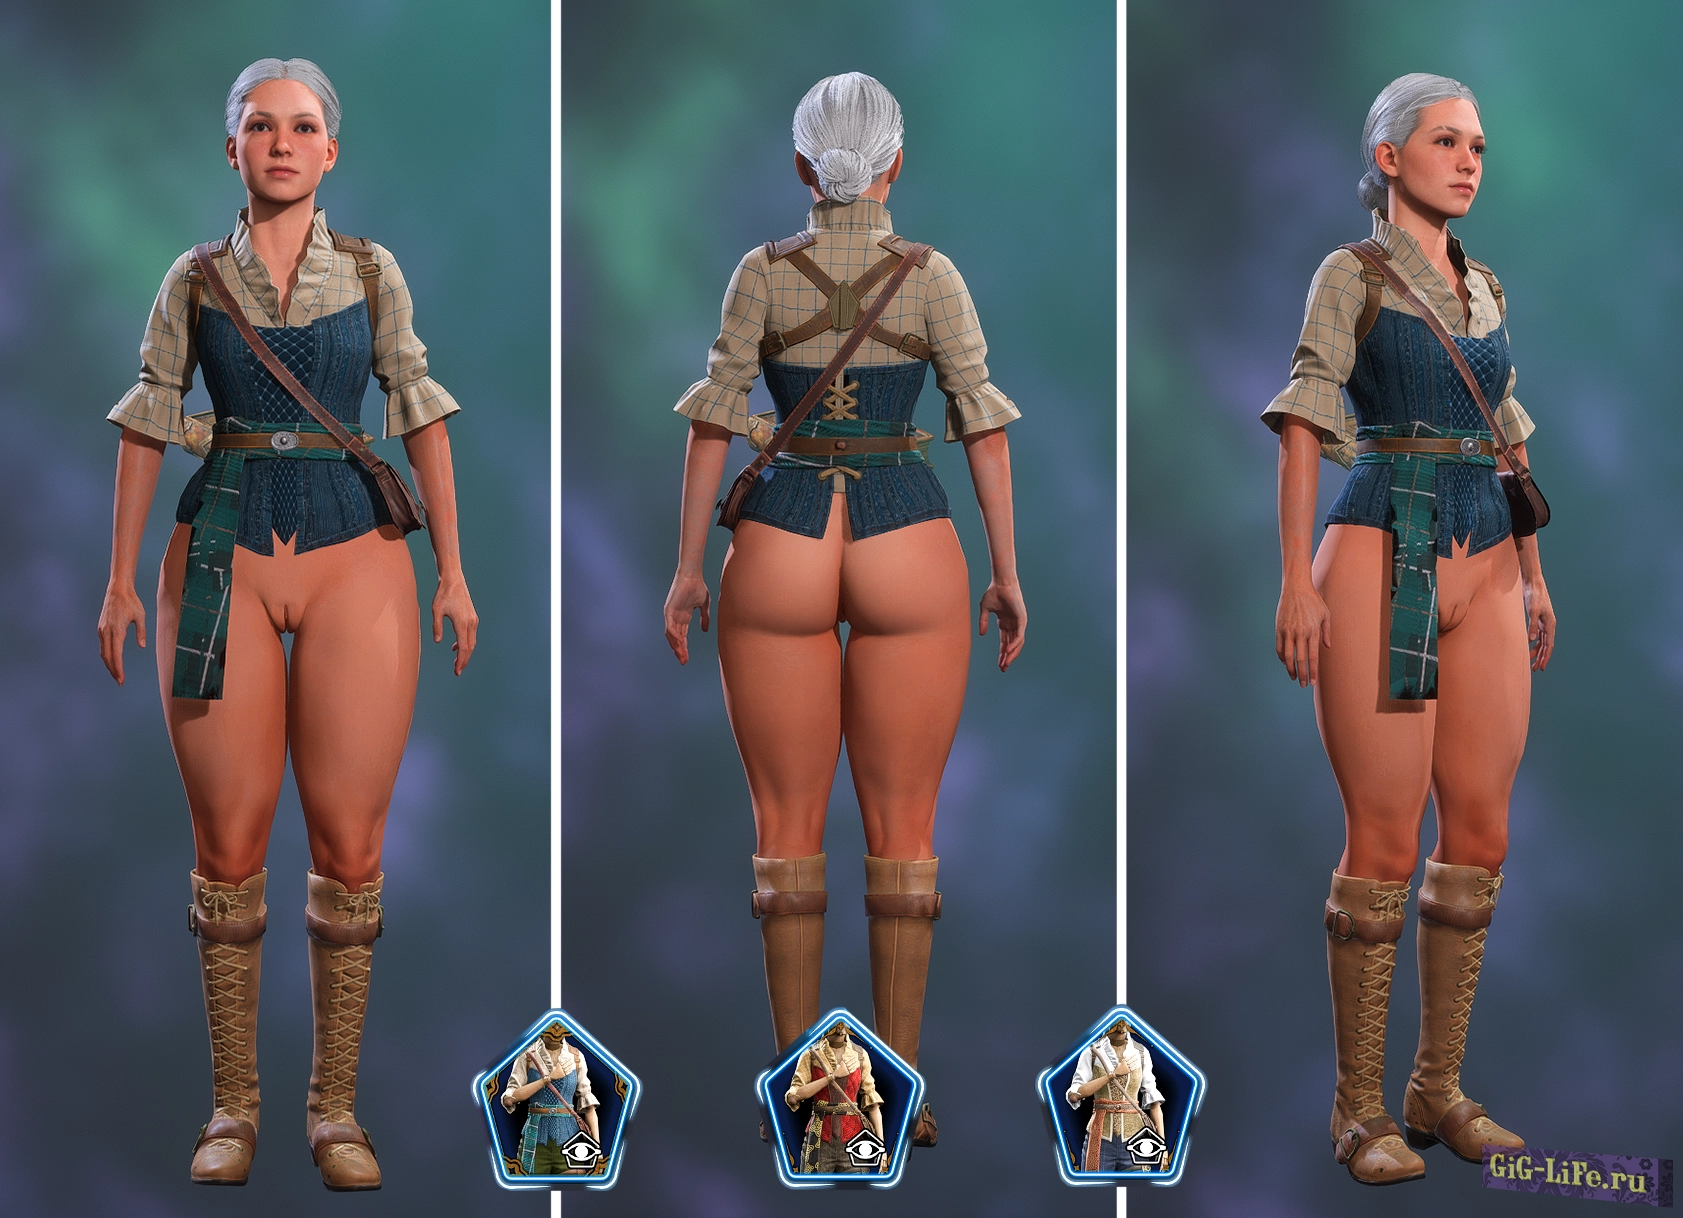 Hogwarts Legacy — Развратный наряд чемпионки с пышной попой | Depraved outfit of a champion with a lush booty